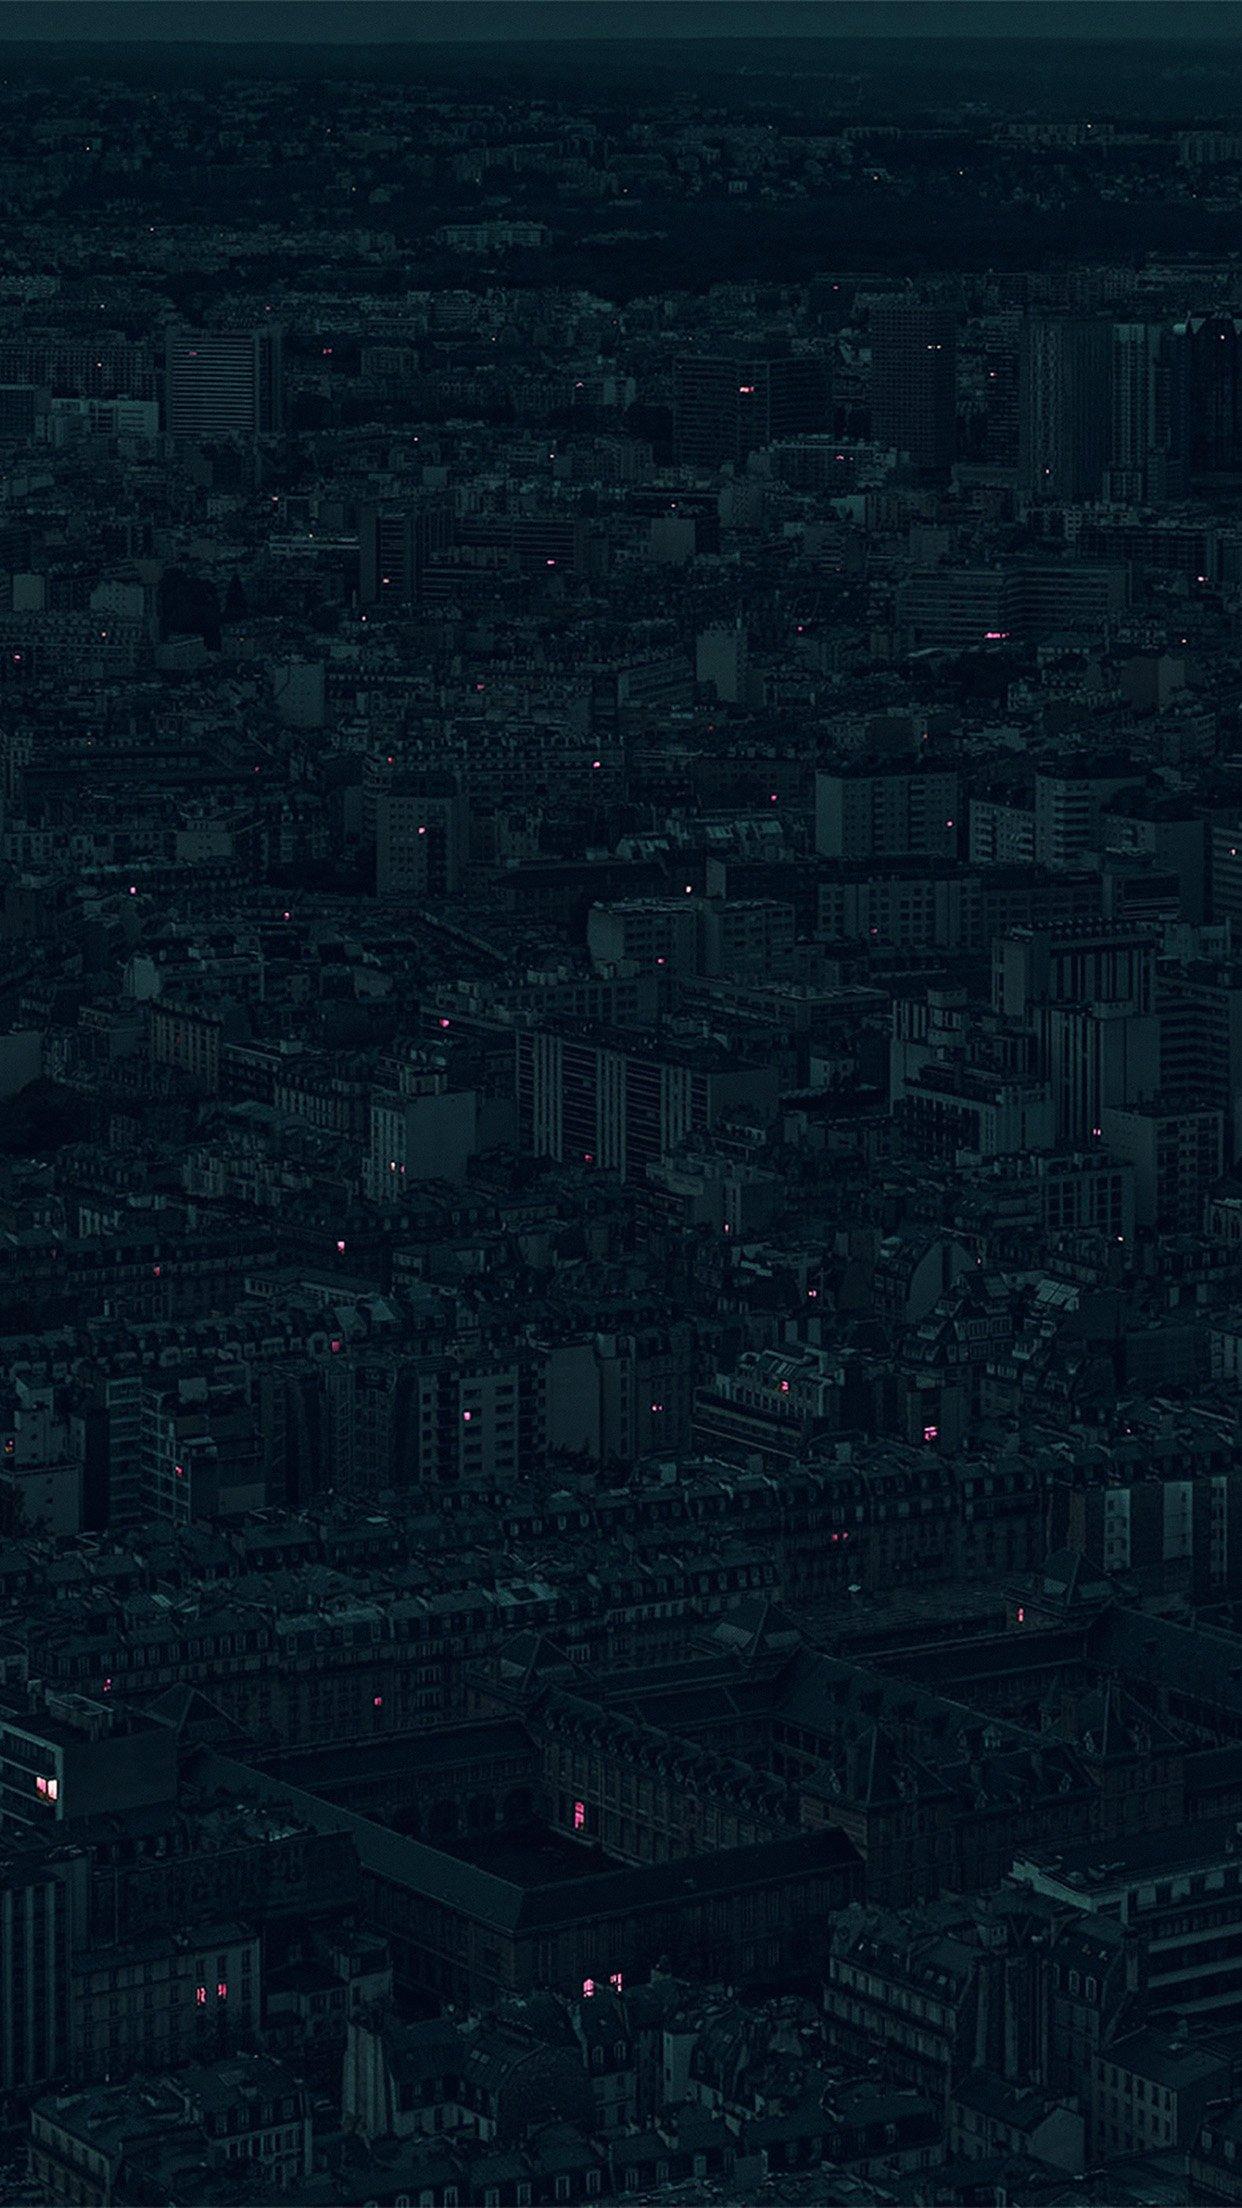 iPhone wallpaper. night city dark minimal